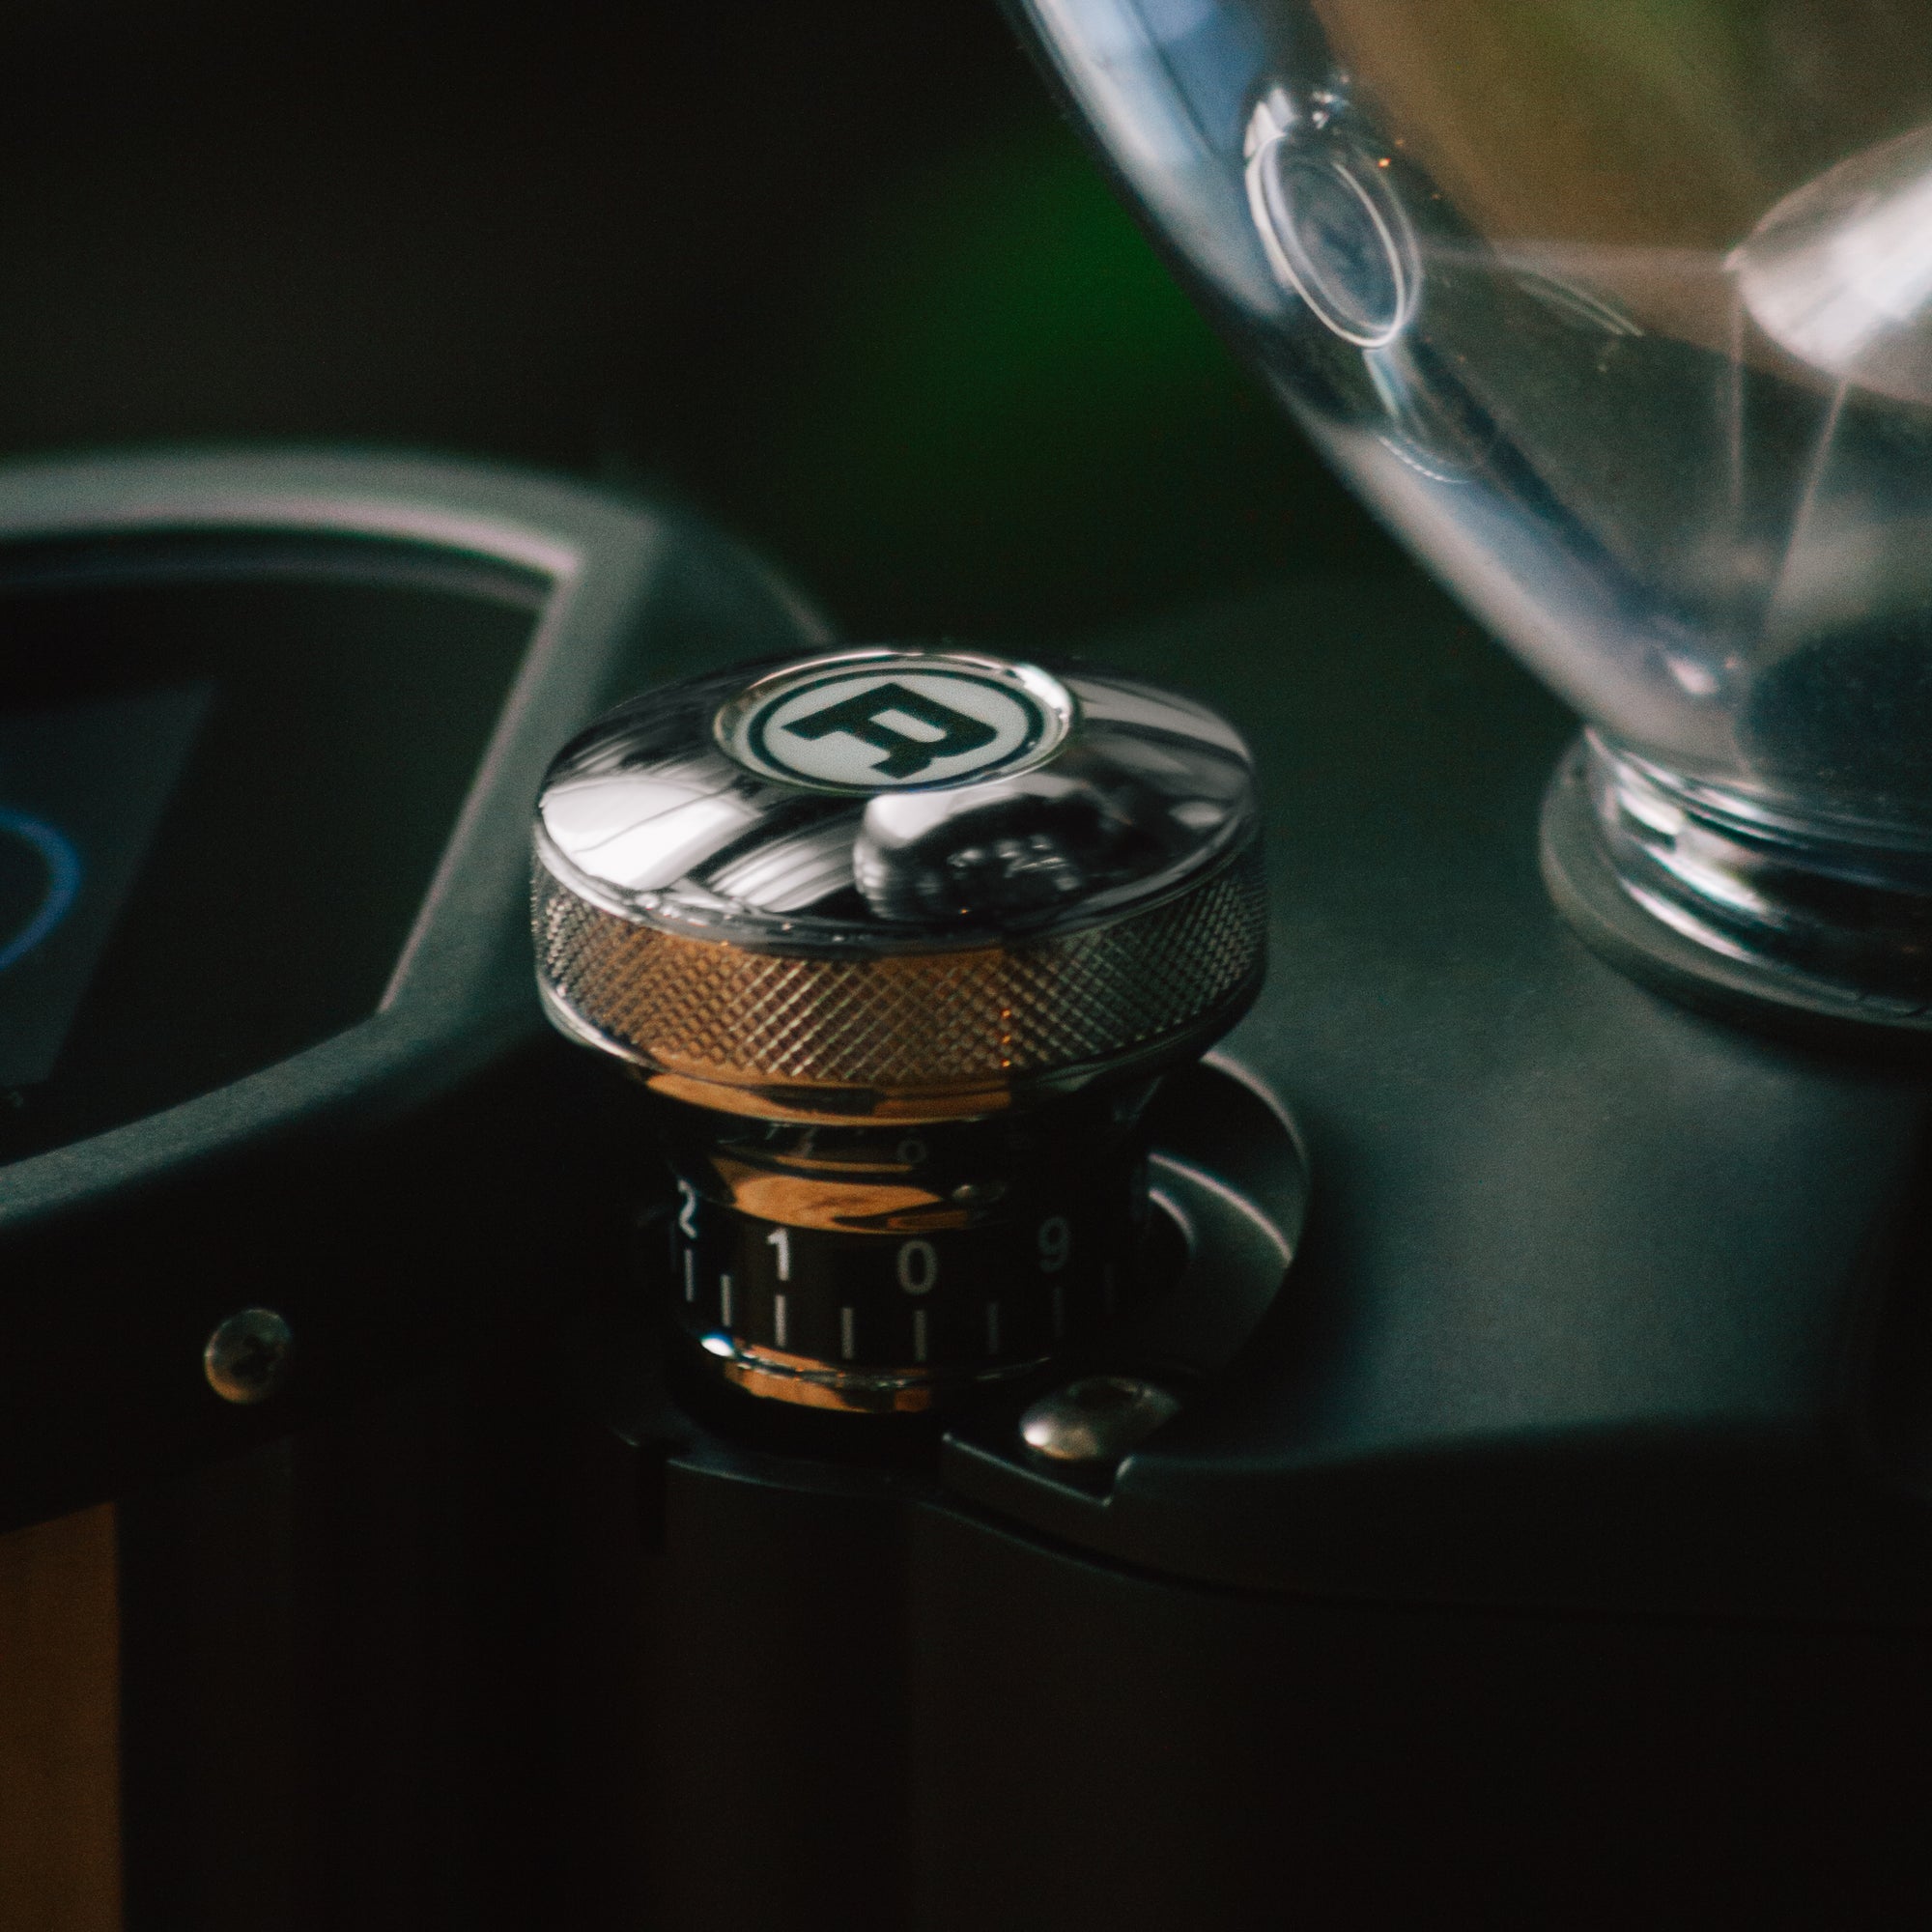 molette du moulin à café espresso rocket fausto espresso coffee grinder scroll wheel